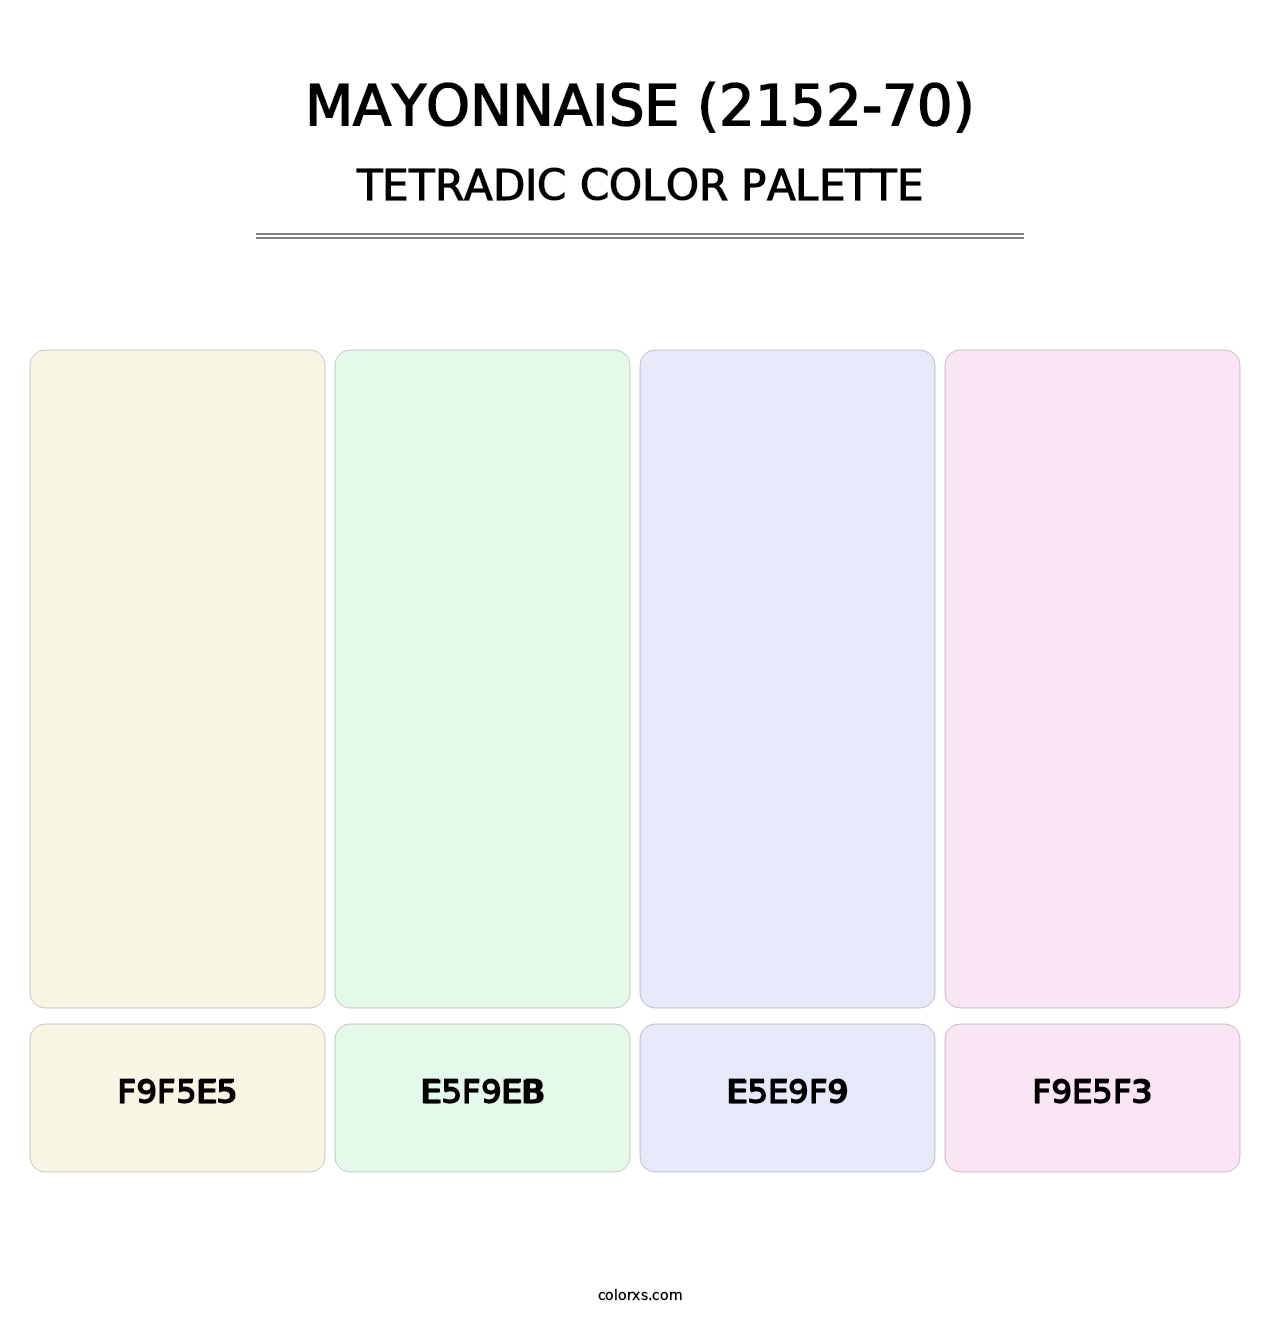 Mayonnaise (2152-70) - Tetradic Color Palette